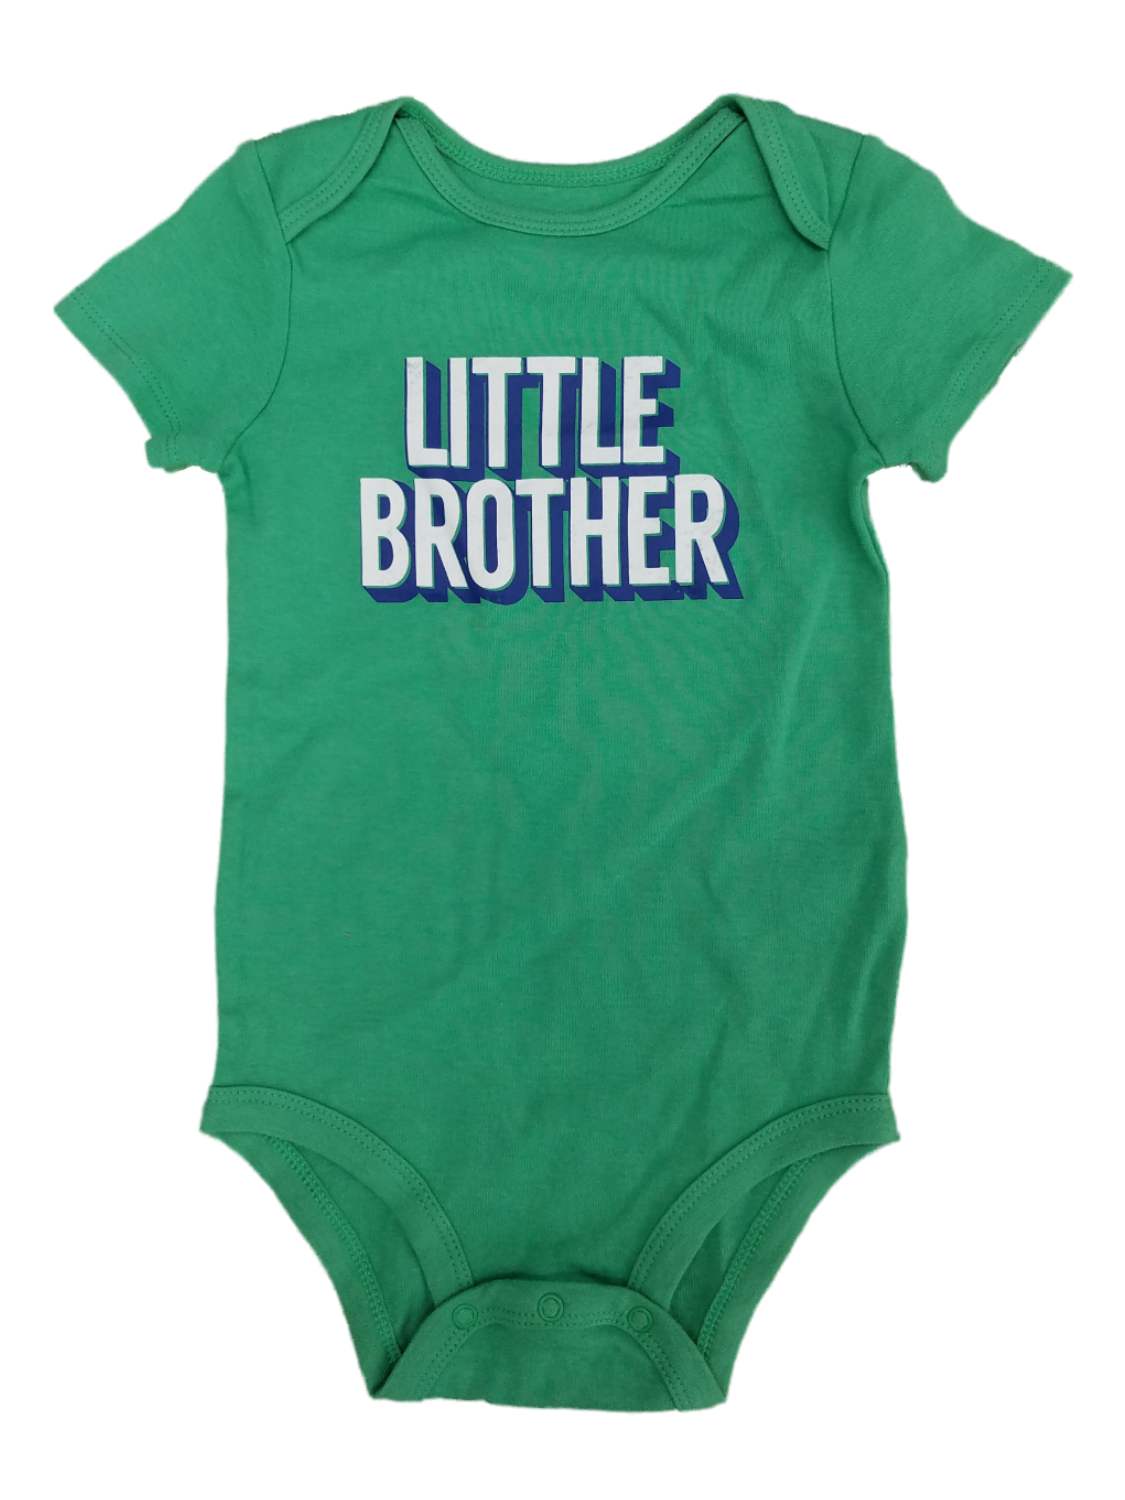 Carter's Carters Infant Boys Green Little Brother Short Sleeve Baby Bodysuit